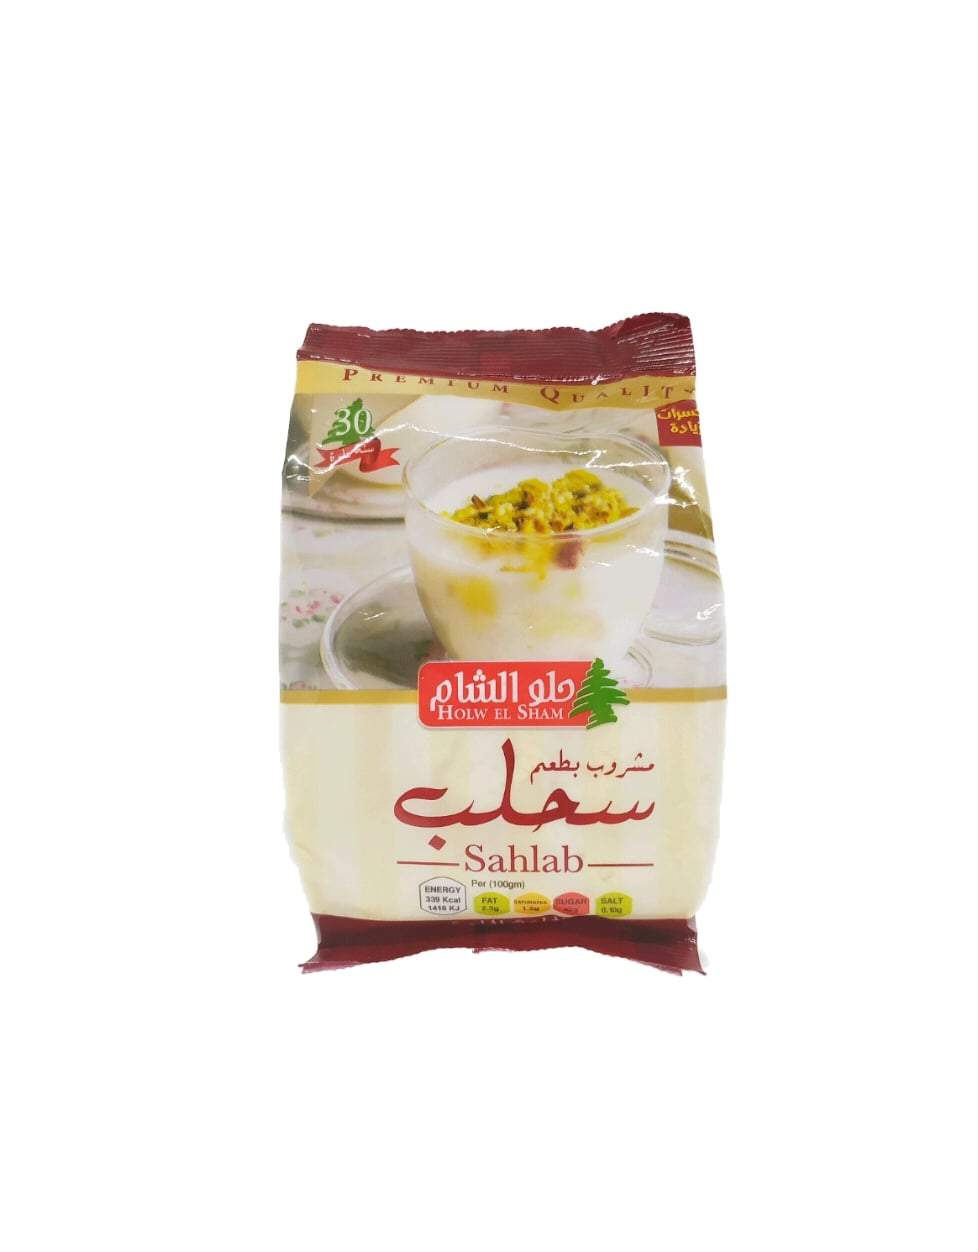 Produits orientaux en ligne : Holw el sham - Sahlab